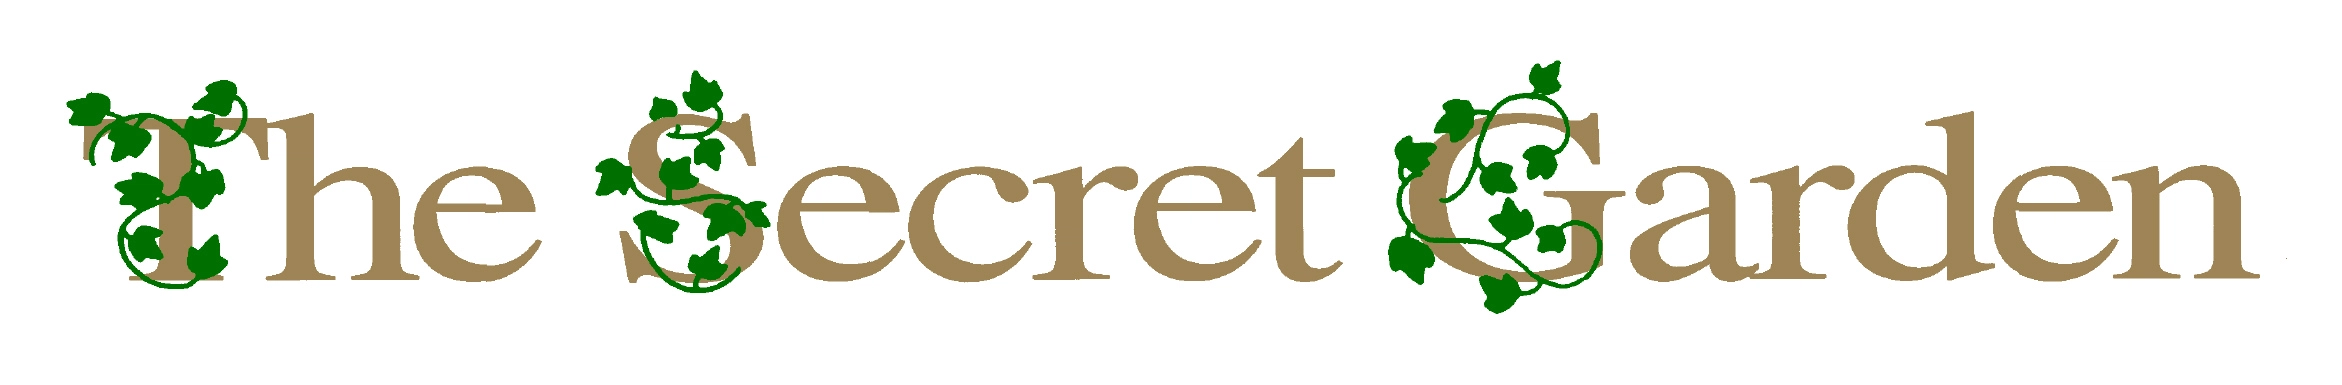 The Secret Garden Logo